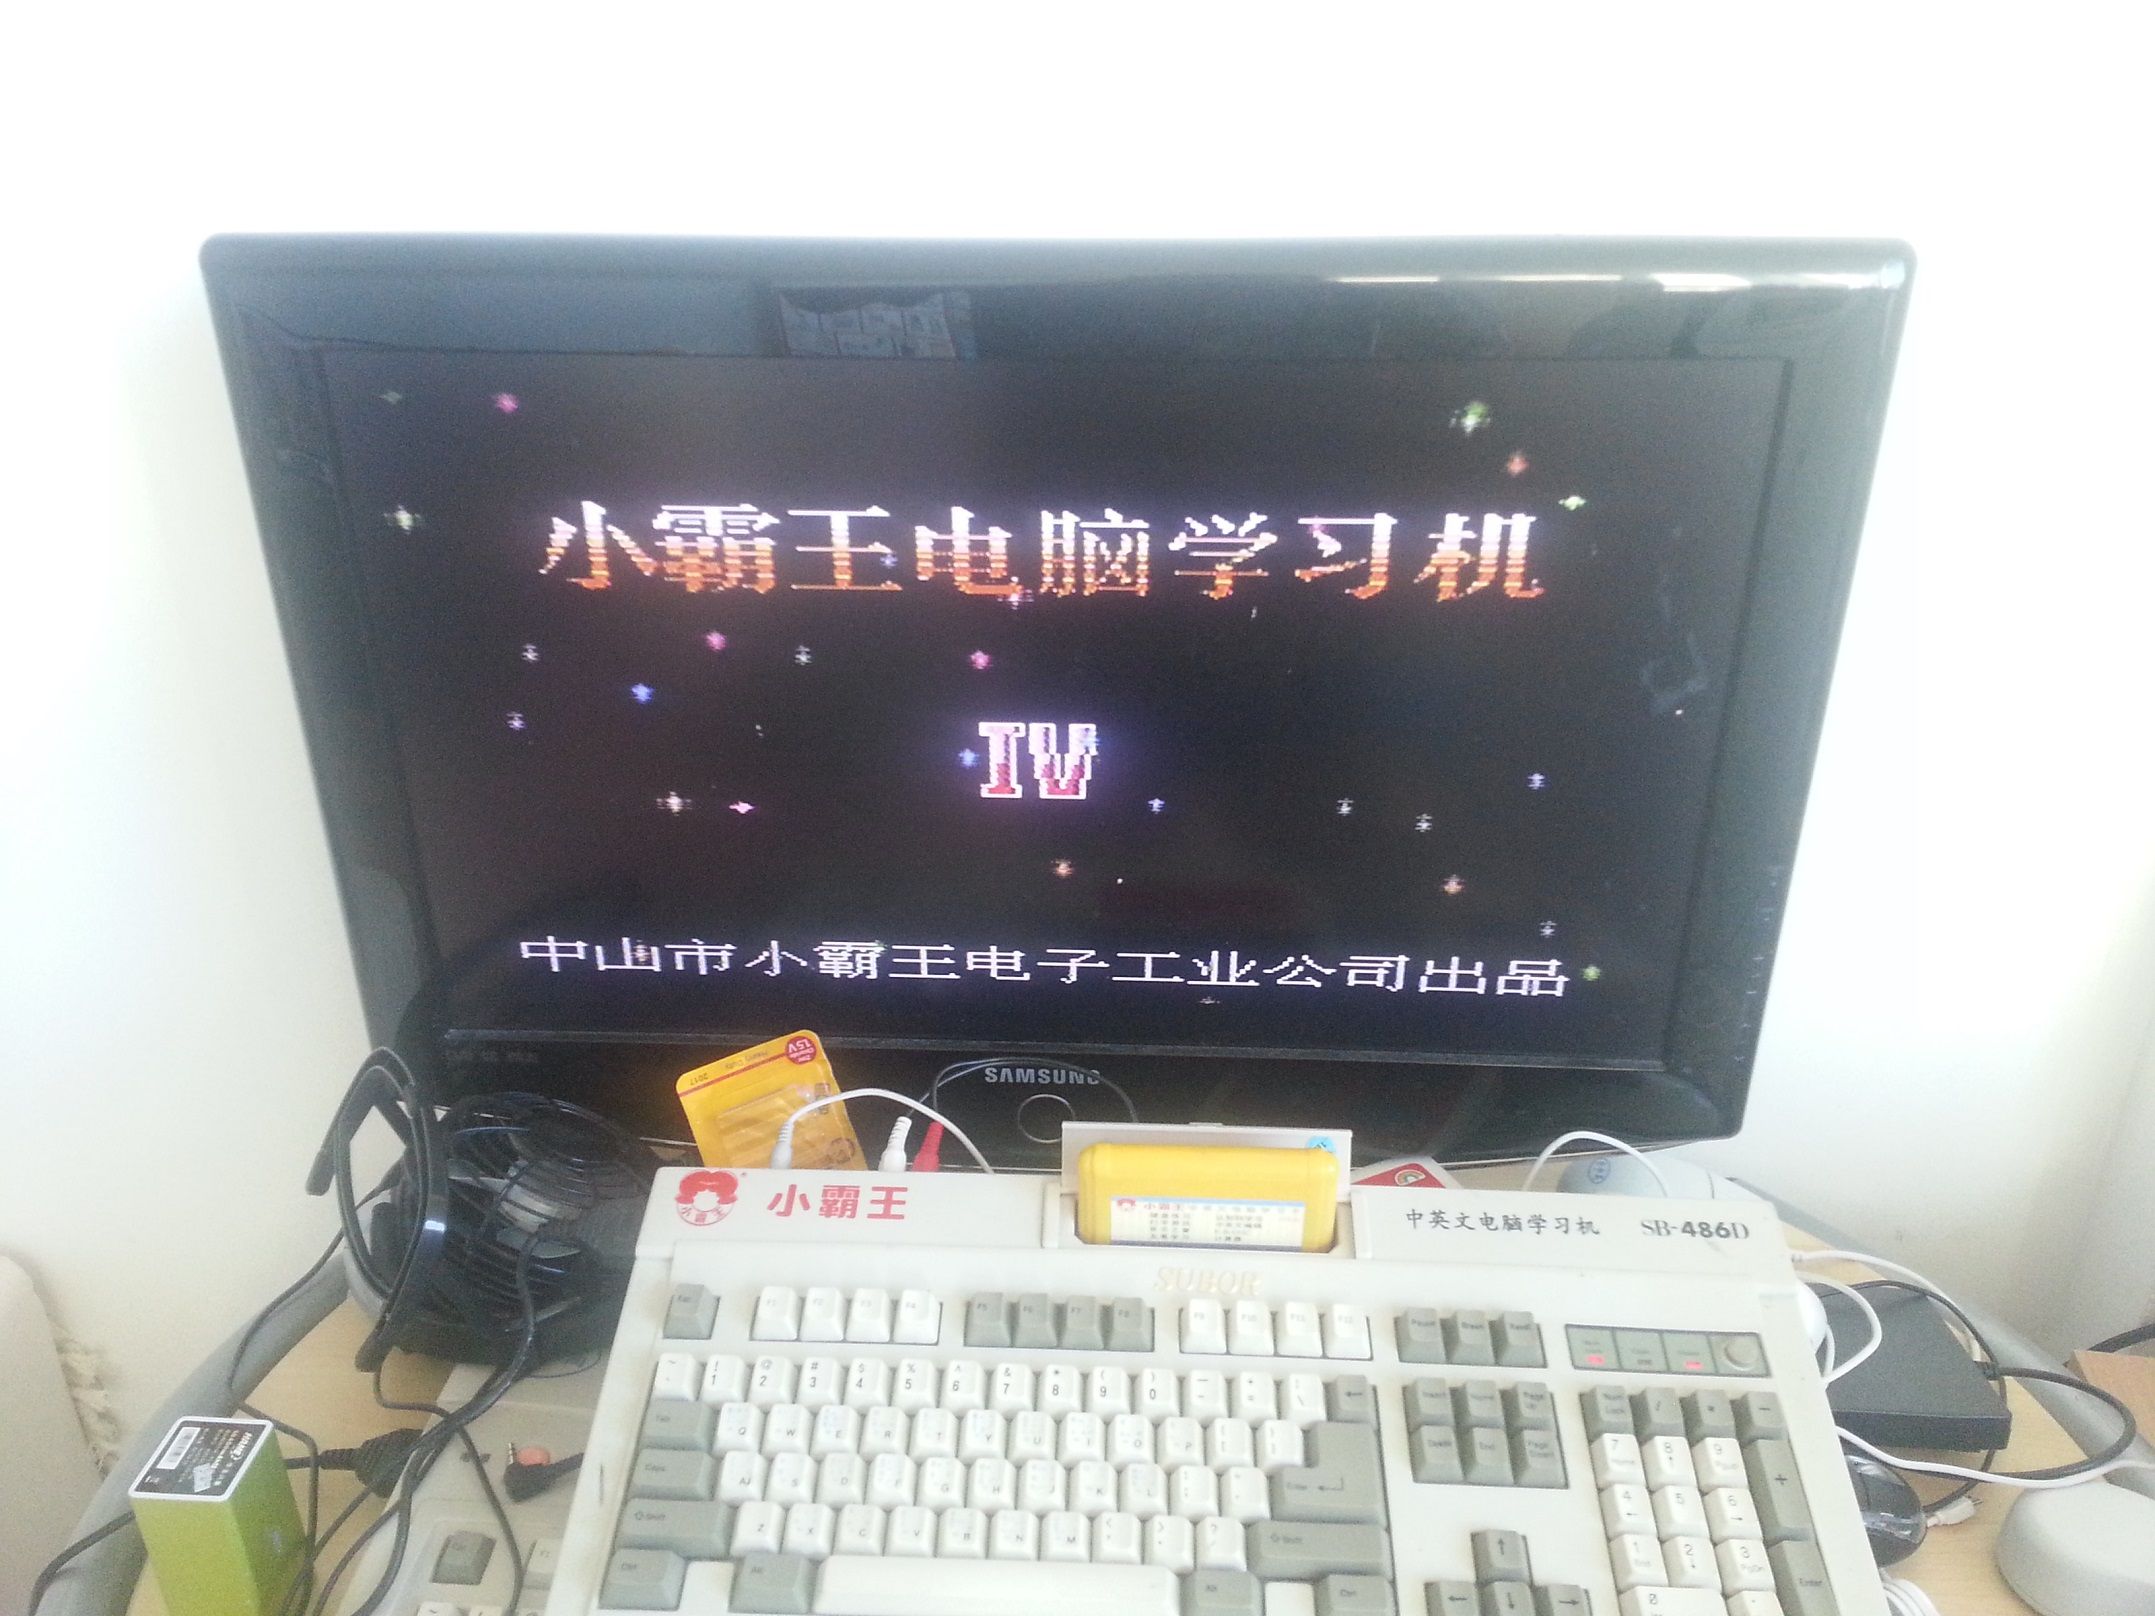 b6d297979db6563b279a1a5f878131d4 The Childhood Memory - Subor Famicom Clone SB-486D (Xiao Ba Wang) 8 bit Nintendo Entertainment System Subor 